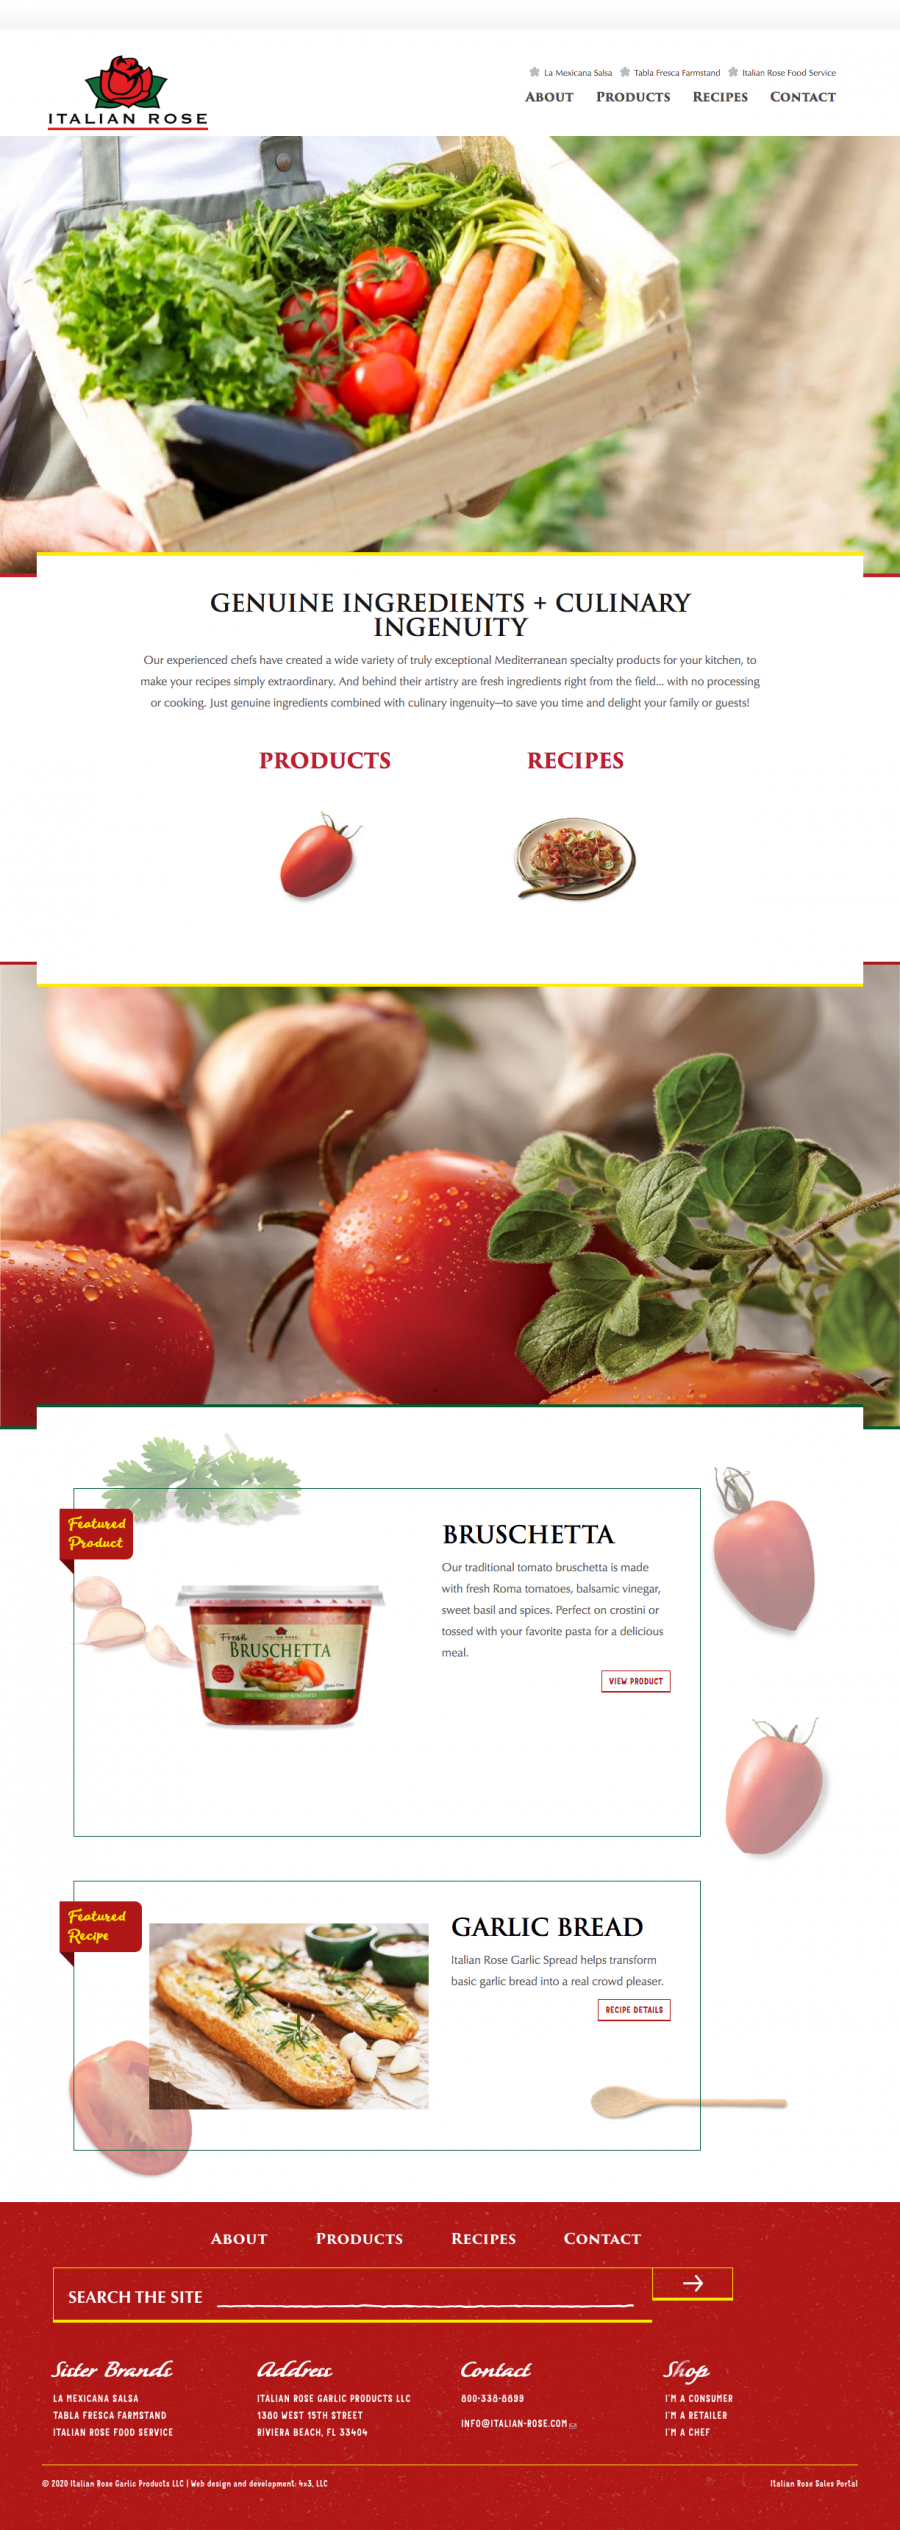 Italian Rose homepage